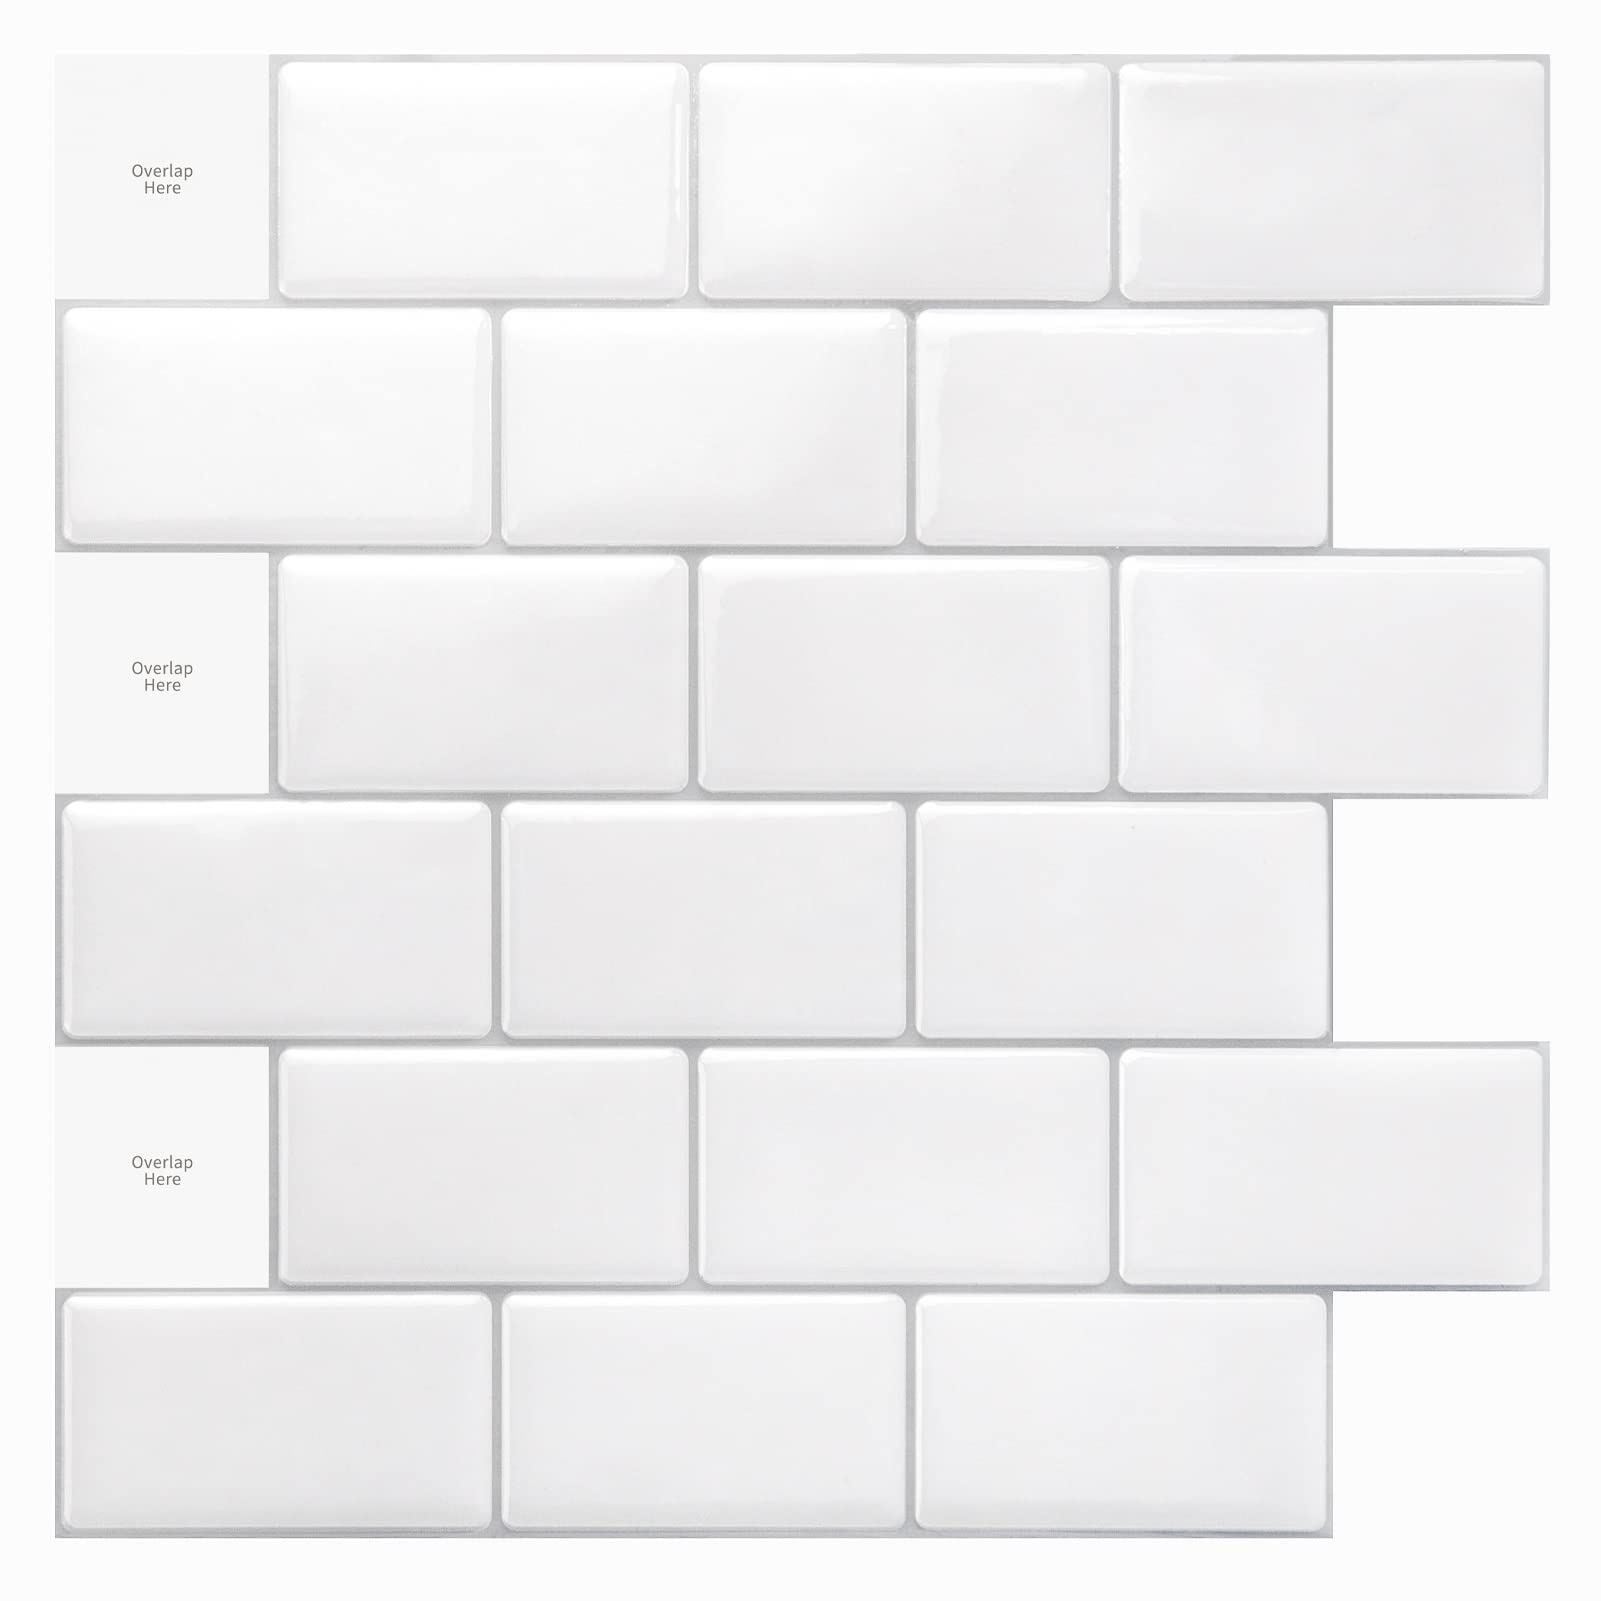 Art3d Premium 10-Sheet Peel and Stick Tile Backsplash - 12x12 for Kitchen , Bright White